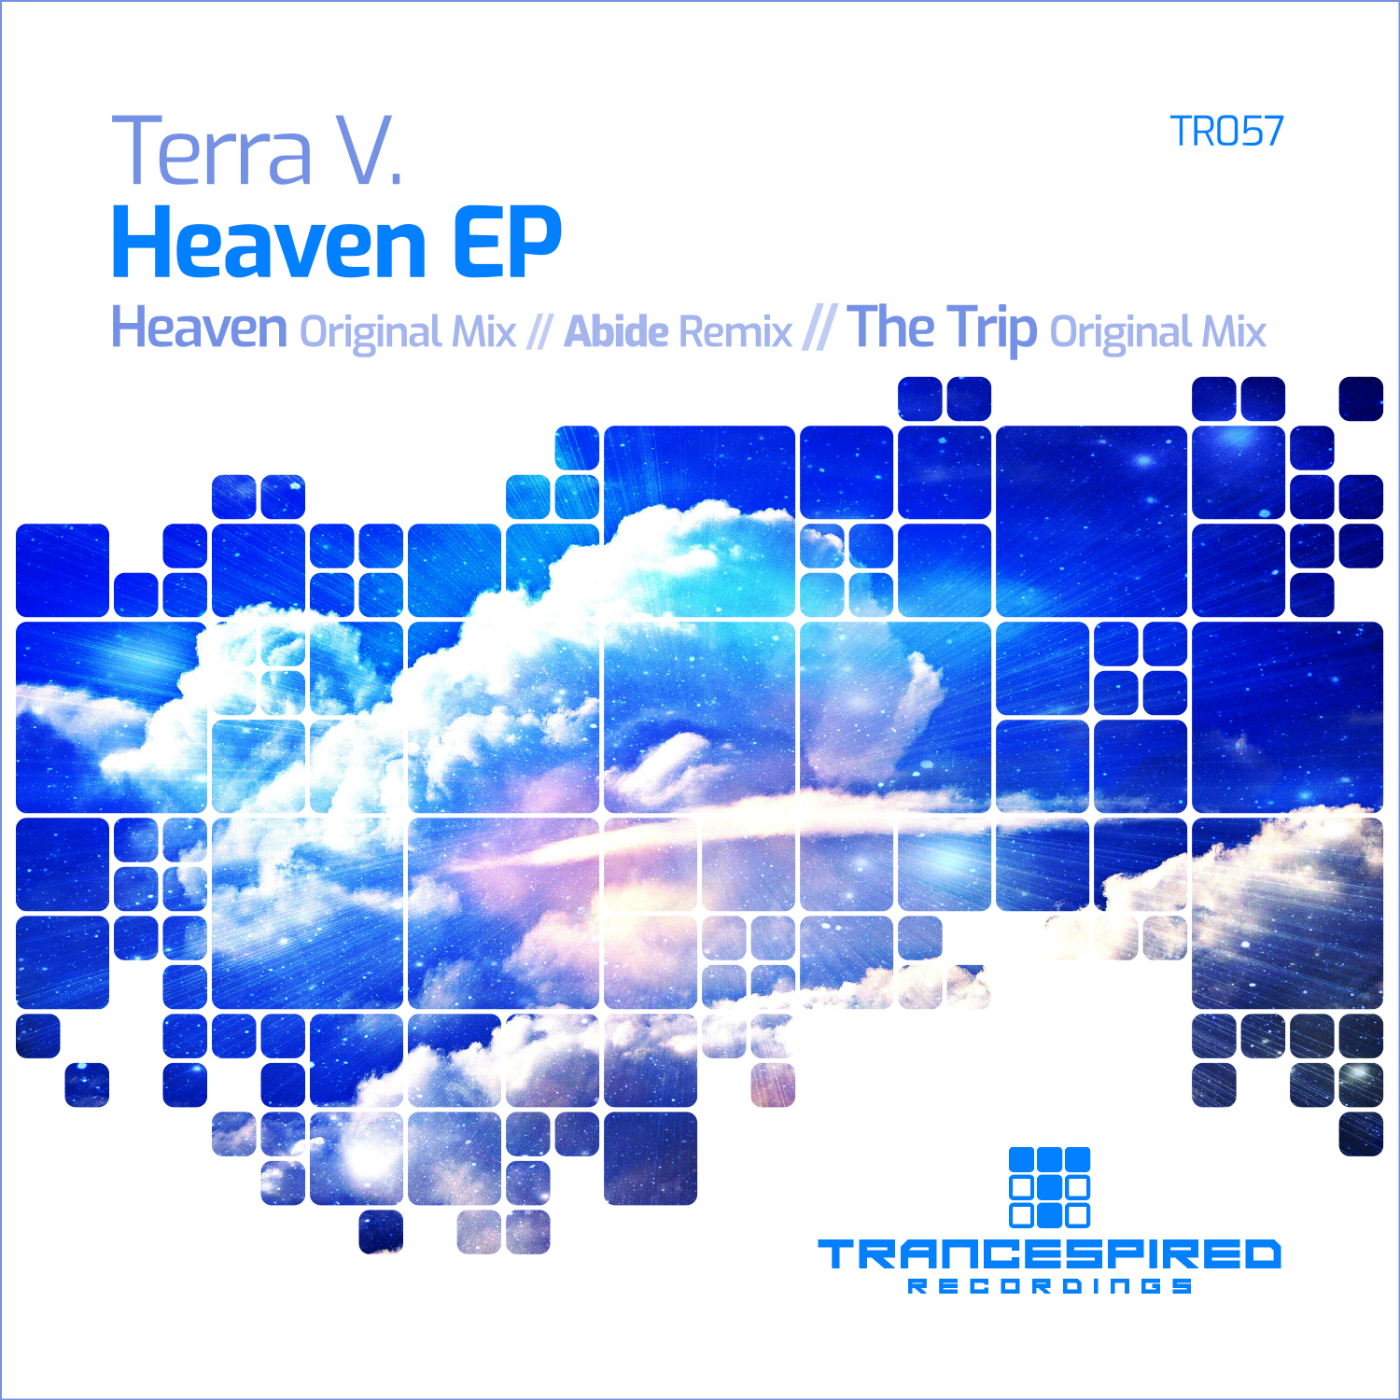 Terra V. presents Heaven EP on Trancespired Recordings